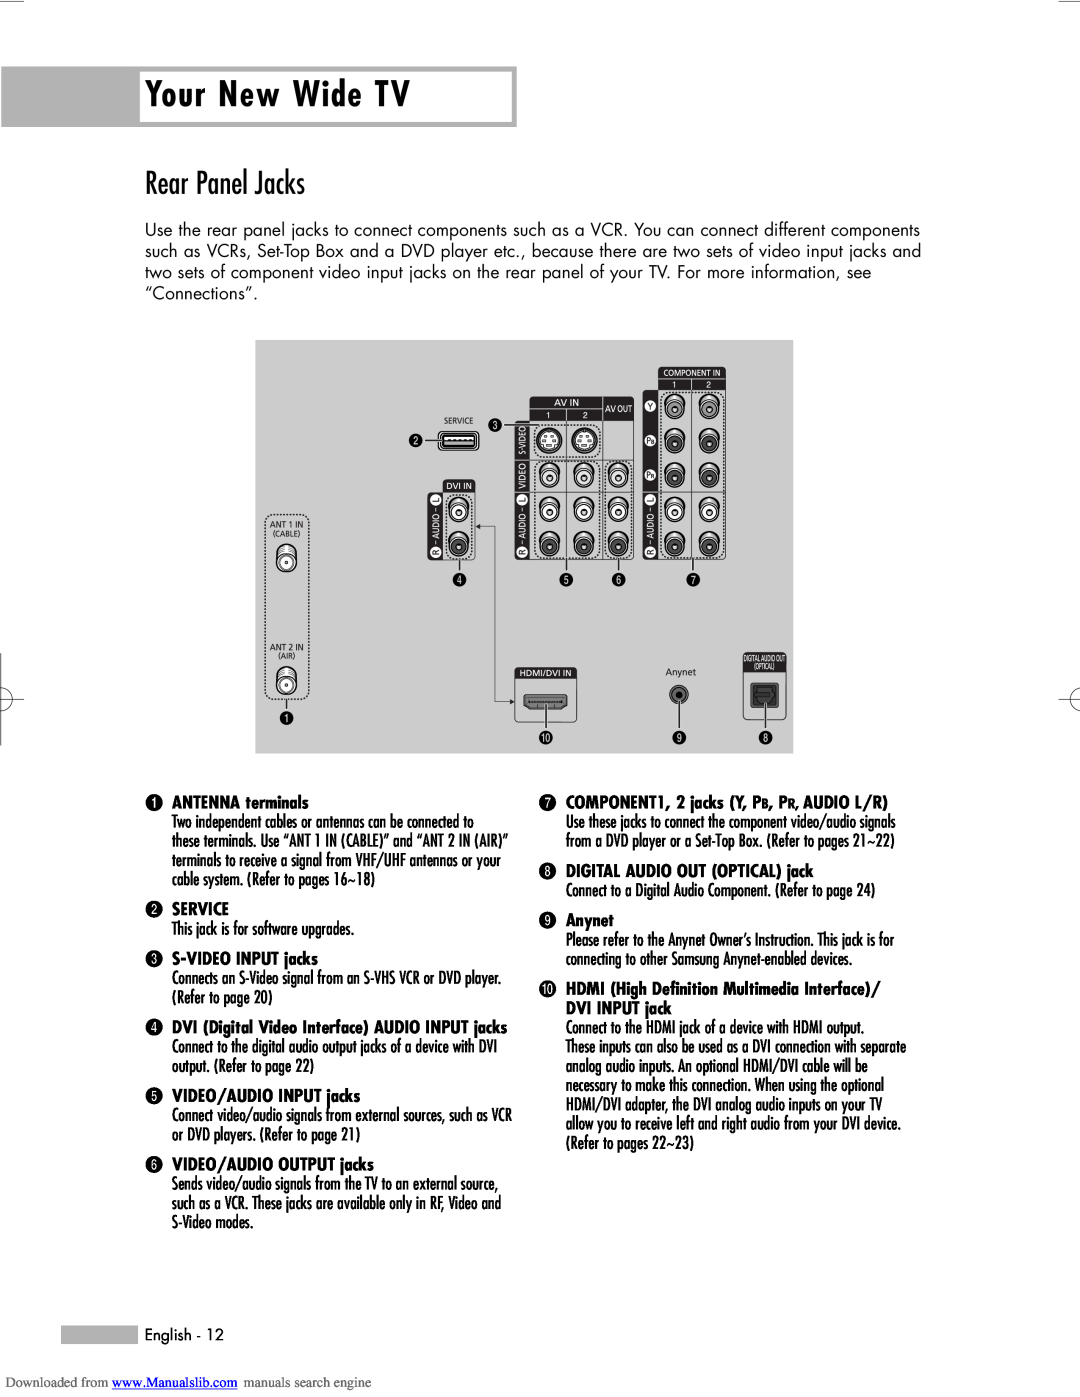 Samsung HL-R6156W manual Rear Panel Jacks, Œ ANTENNA terminals, ´ Service, ˇ S-VIDEO INPUT jacks, ˆ VIDEO/AUDIO INPUT jacks 